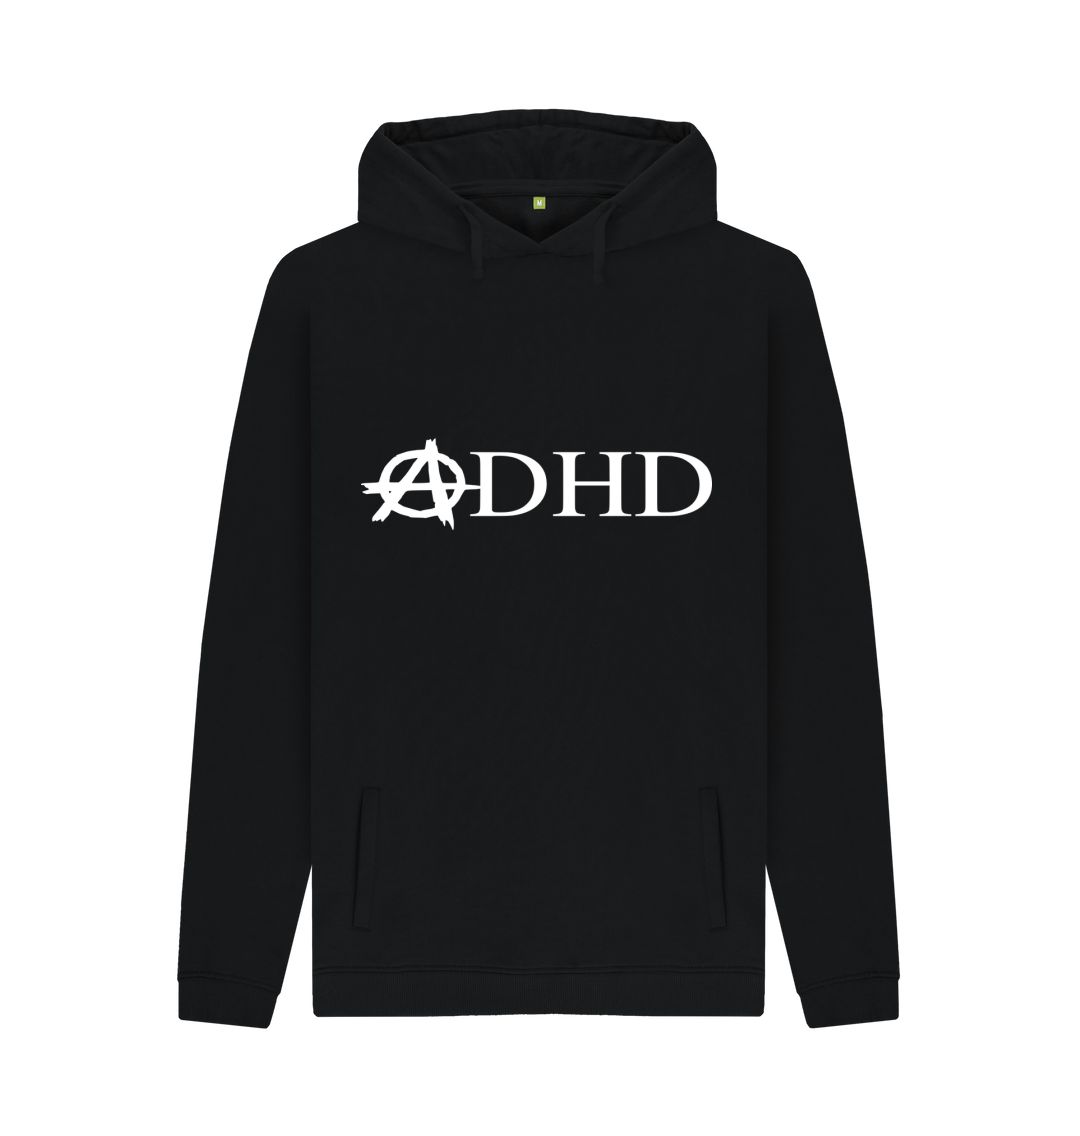 Black Anarchy ADHD unisex hoodie